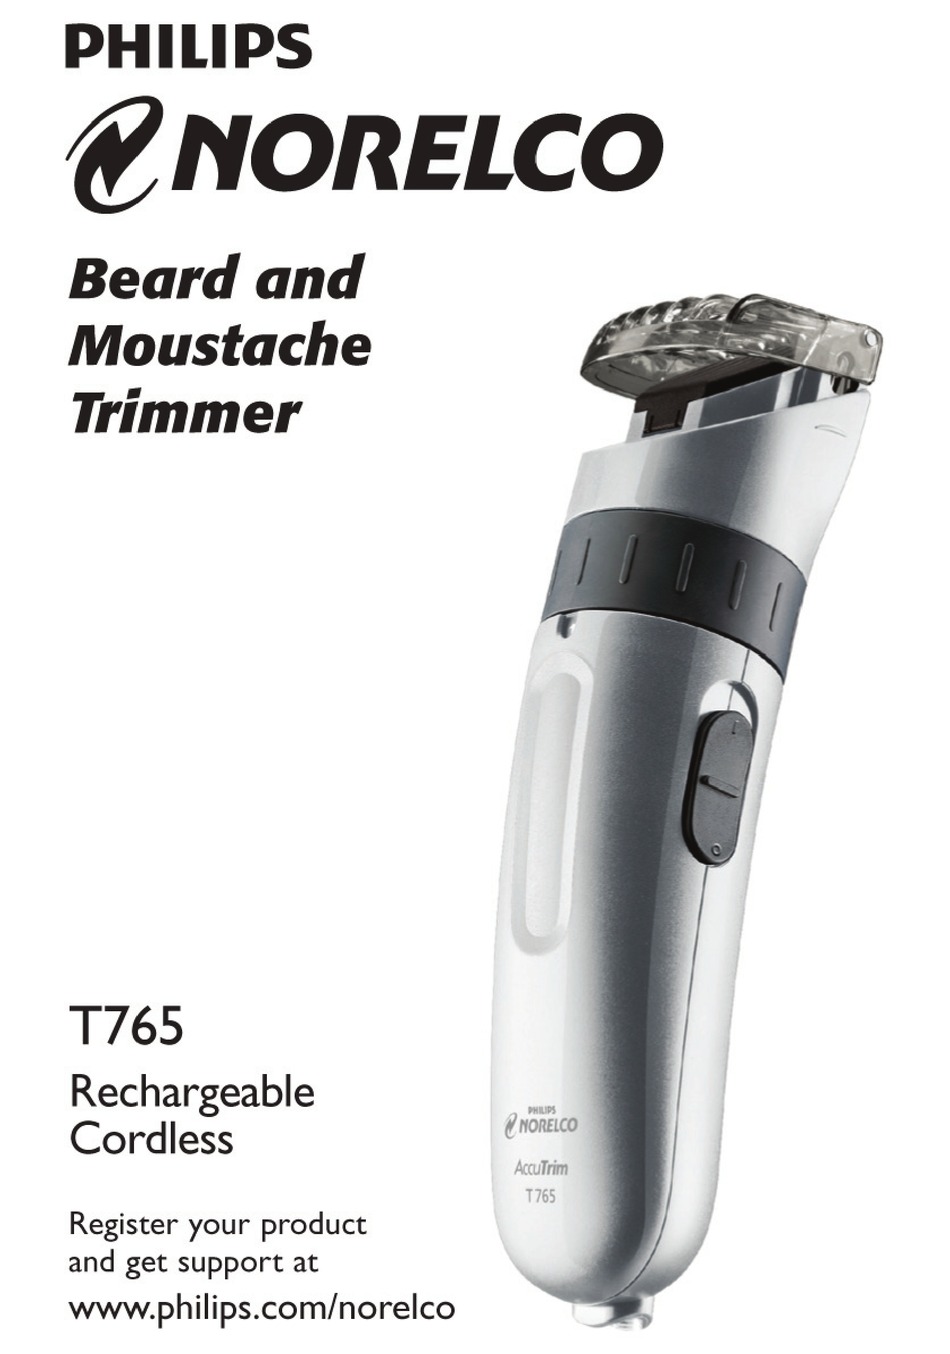 norelco t510 beard mustache trimmer